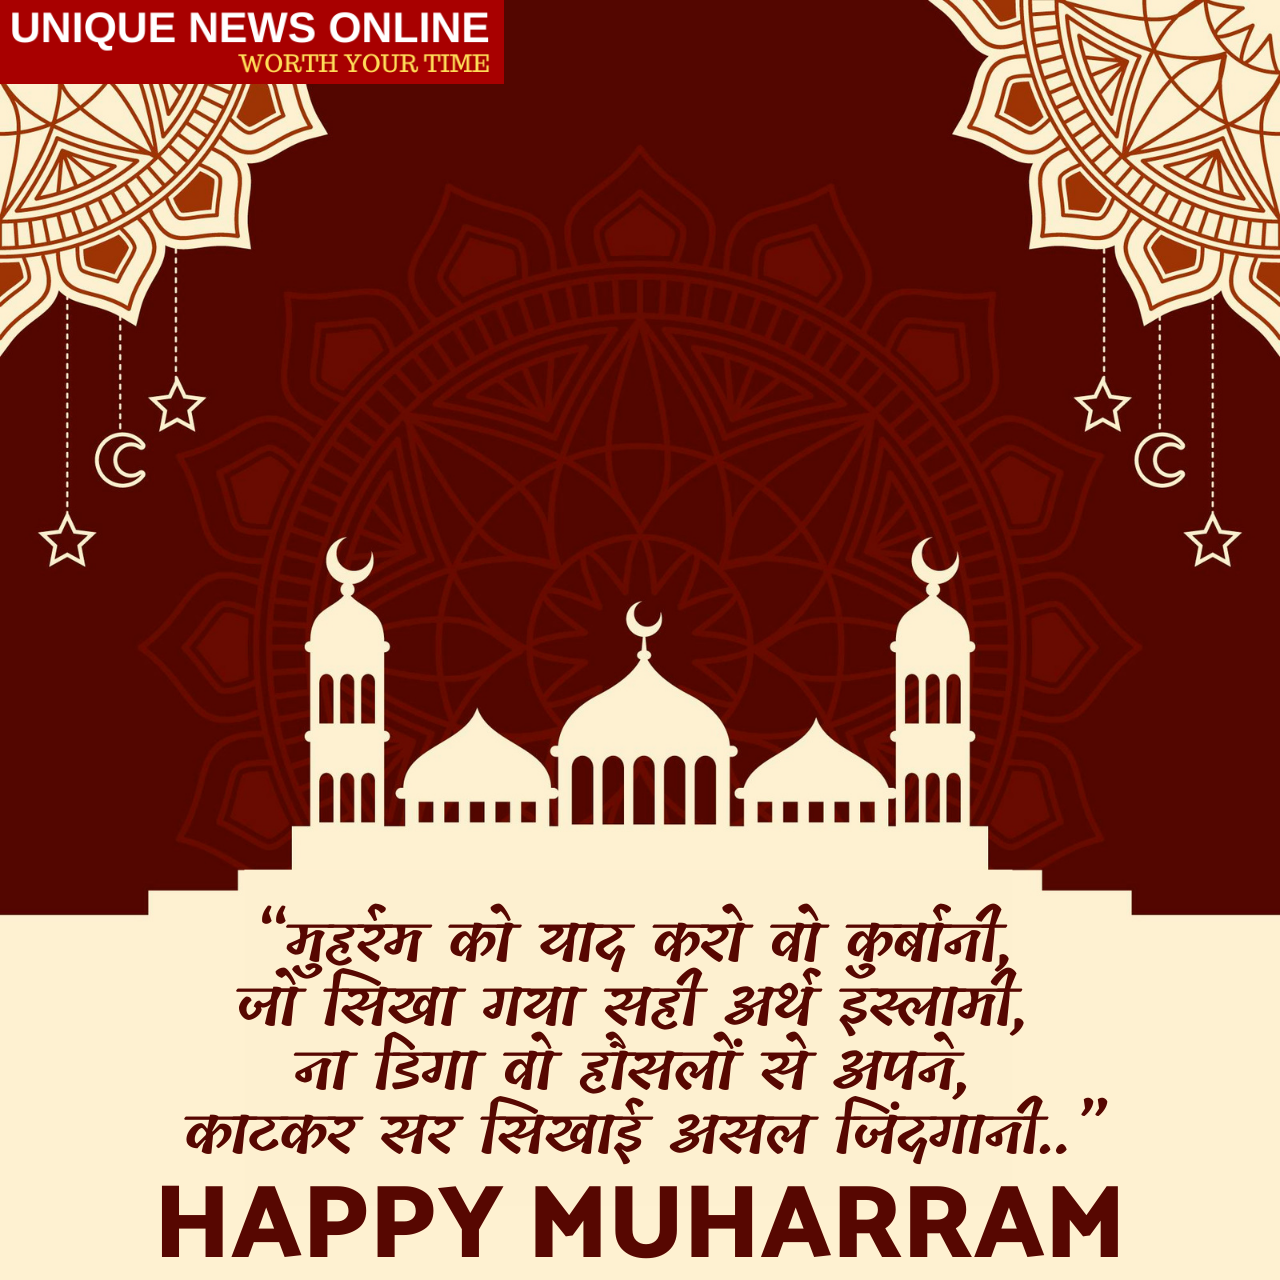 Muharram 2021 Hindi Wishes, Status, Greetings HD Images, Shayari, and Quotes to share